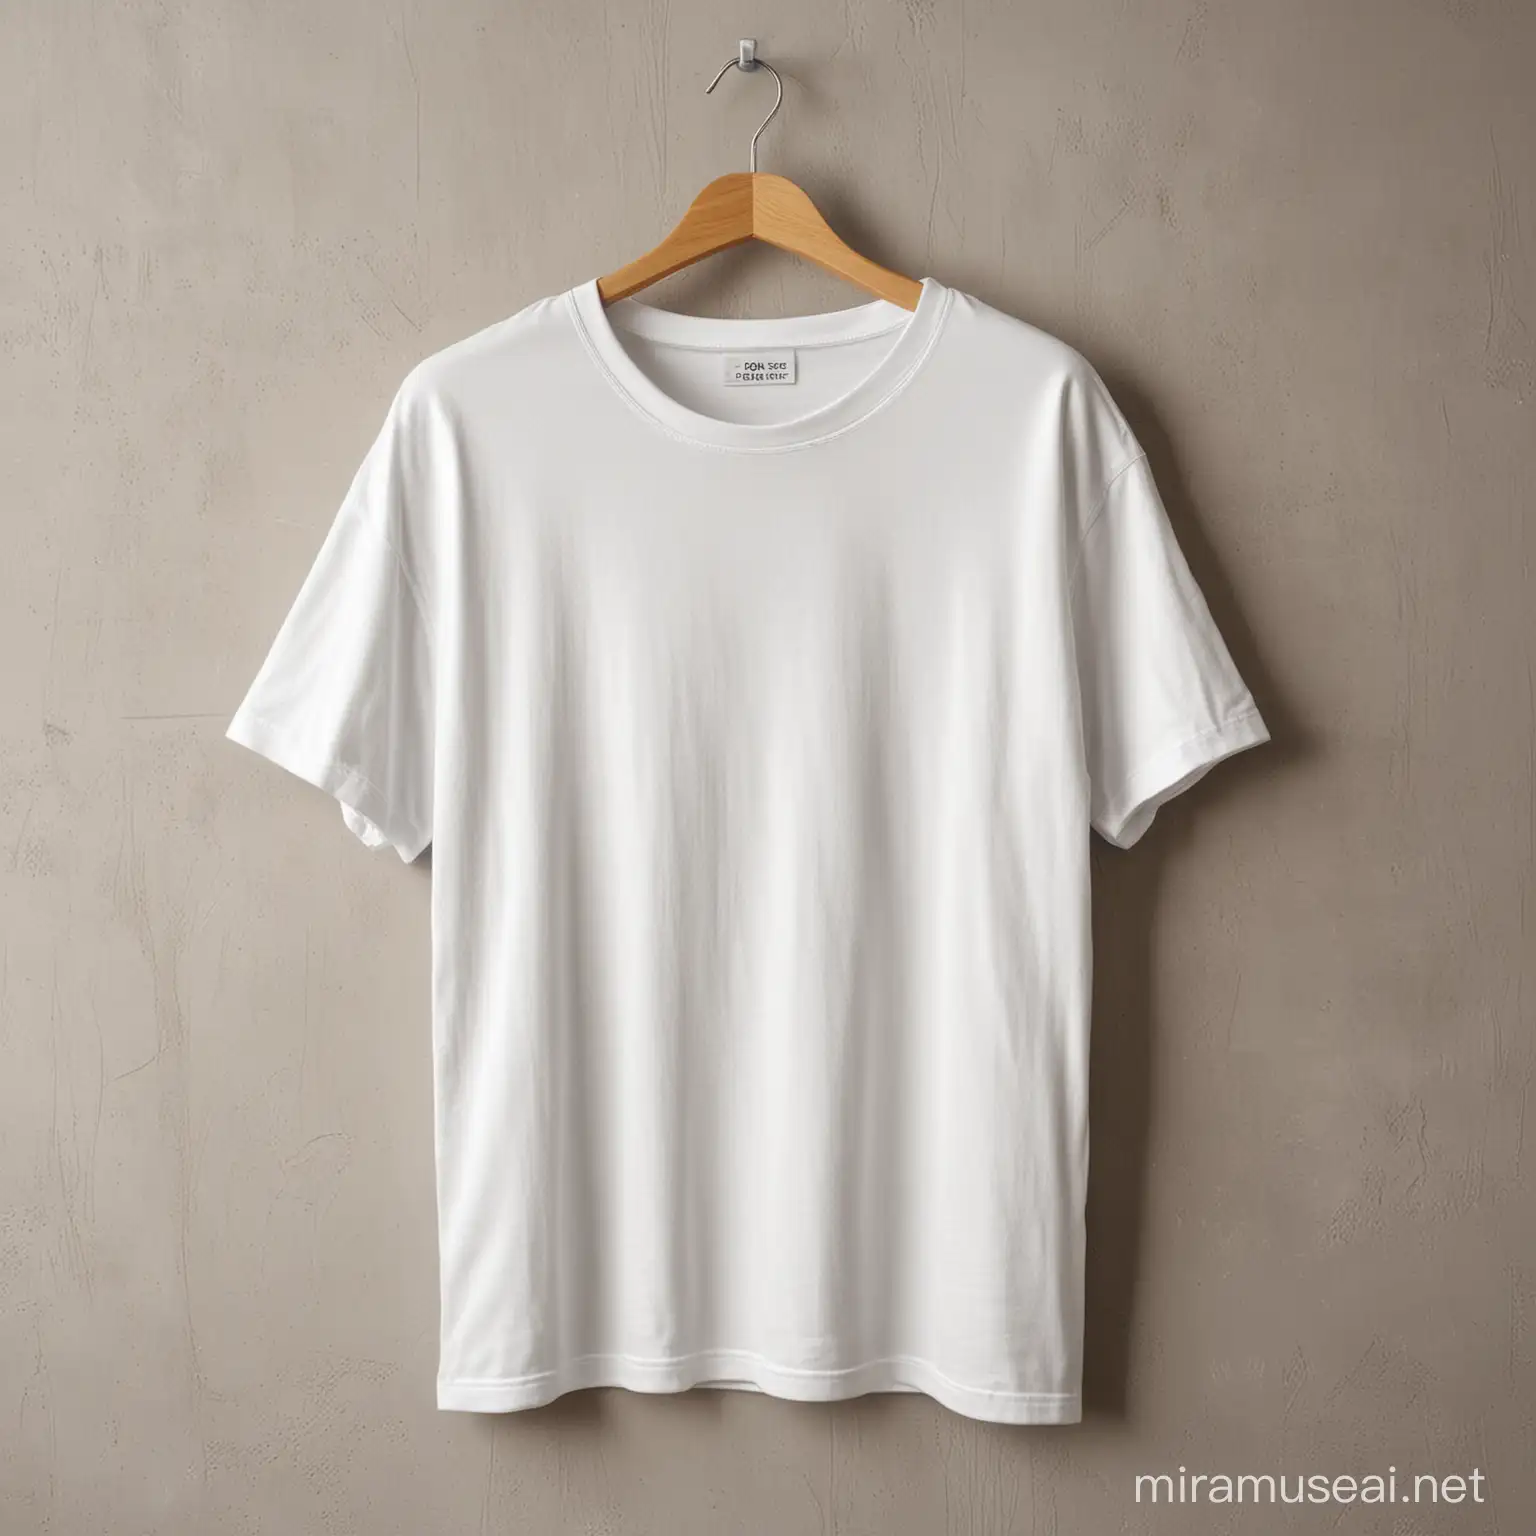 plain white drop shoulder t shirt hanging on a wall